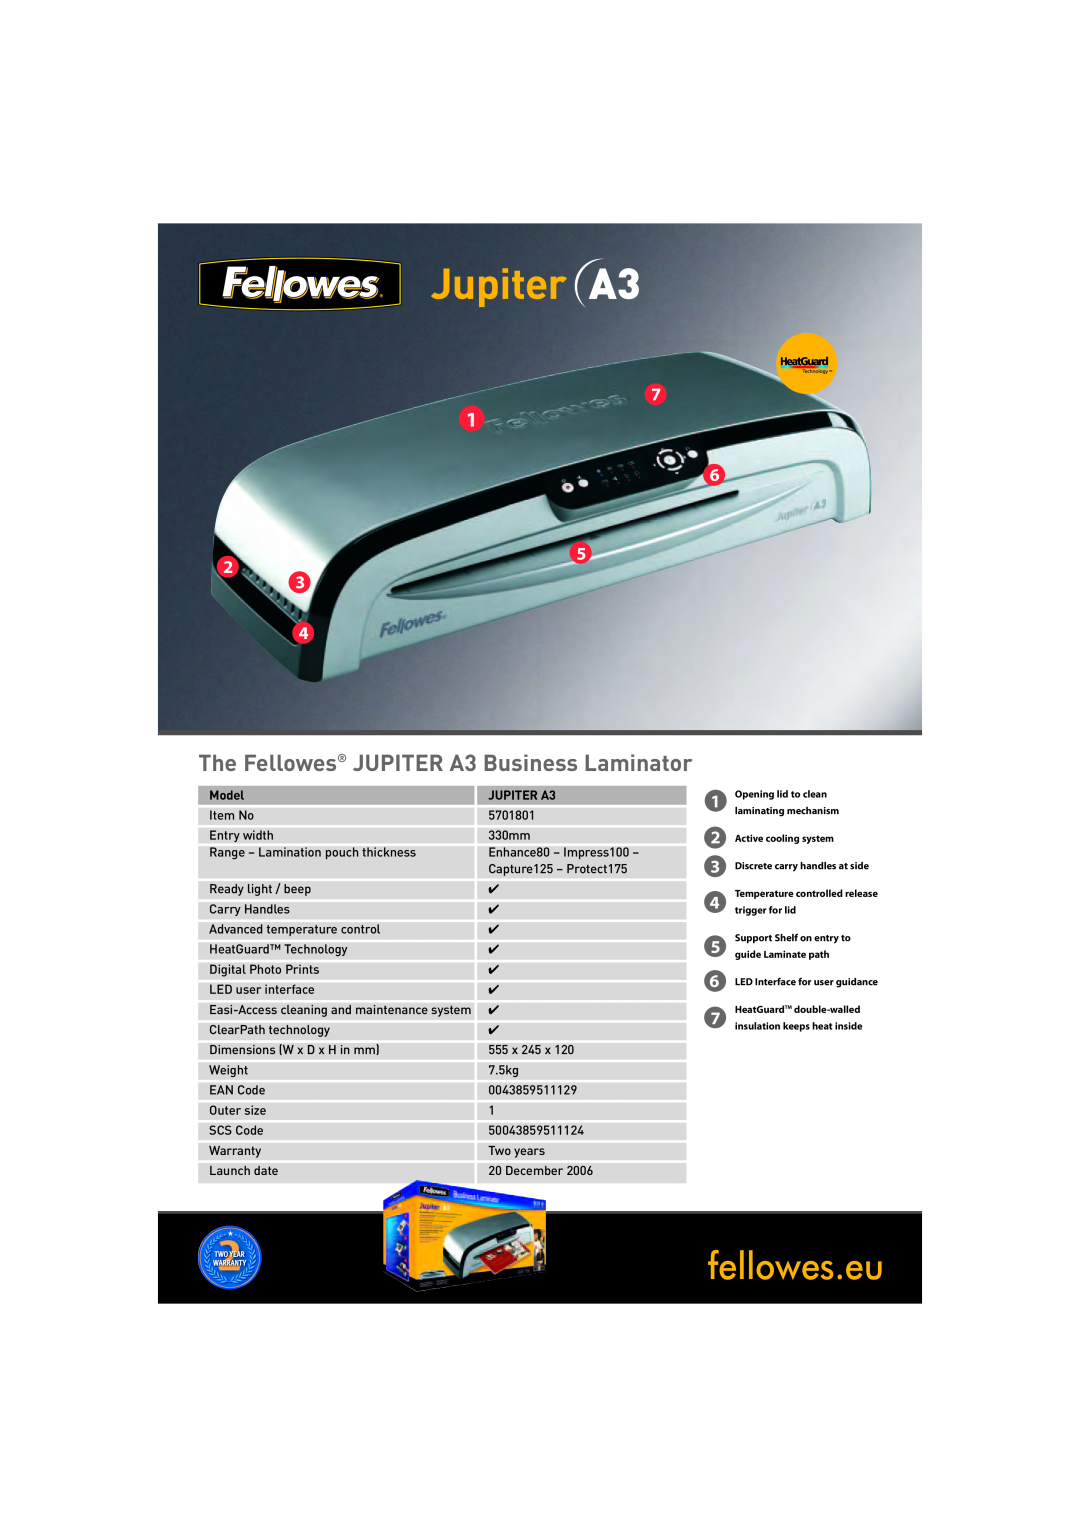 Fellowes a3 manual fellowes.eu, The Fellowes JUPITER A3 Business Laminator, Model 